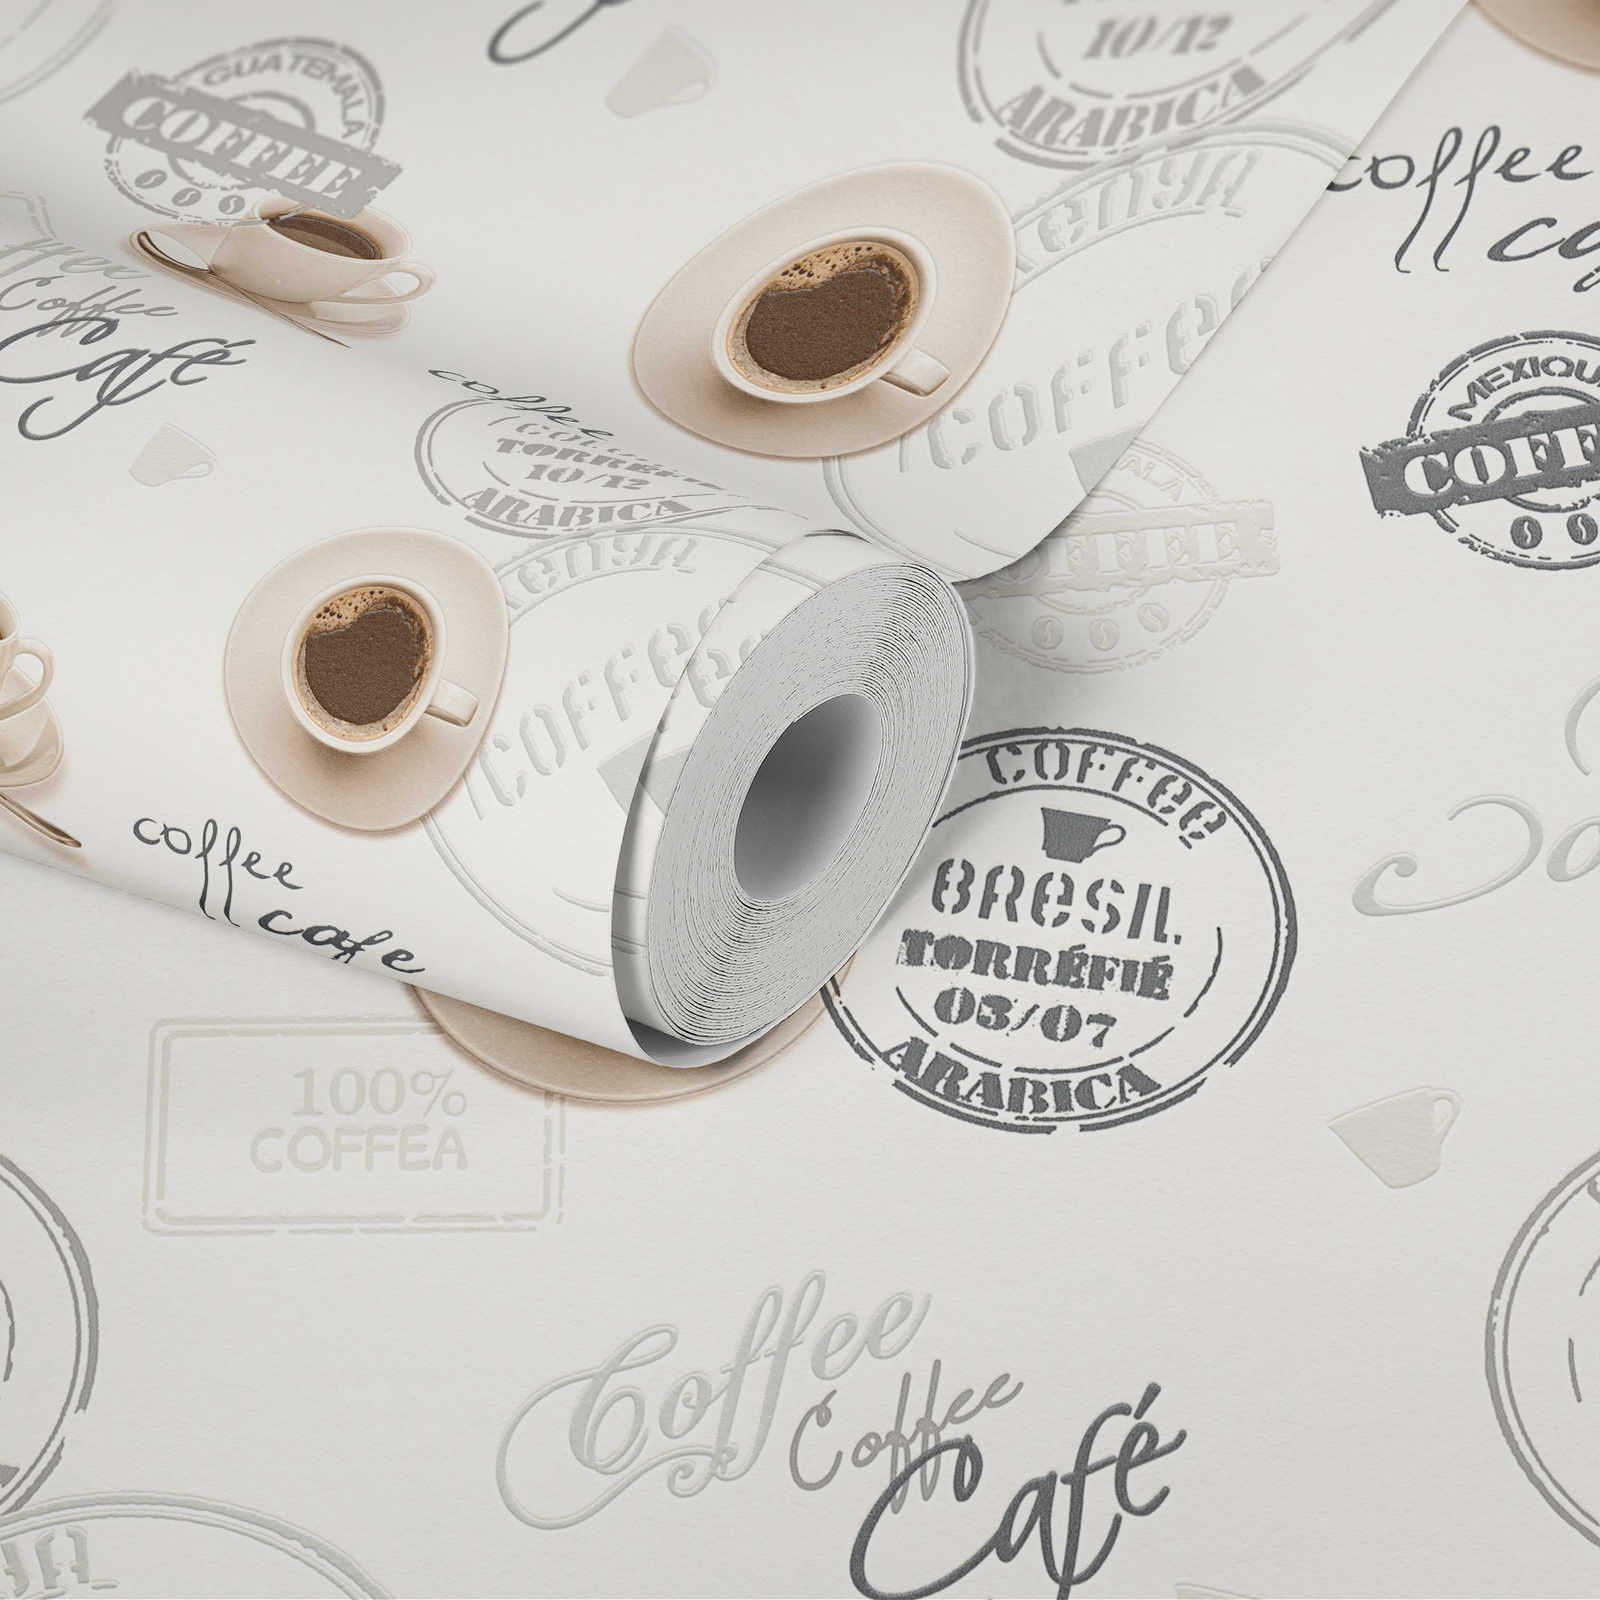             Coffee wallpaper for kitchens, retro design - cream, beige
        